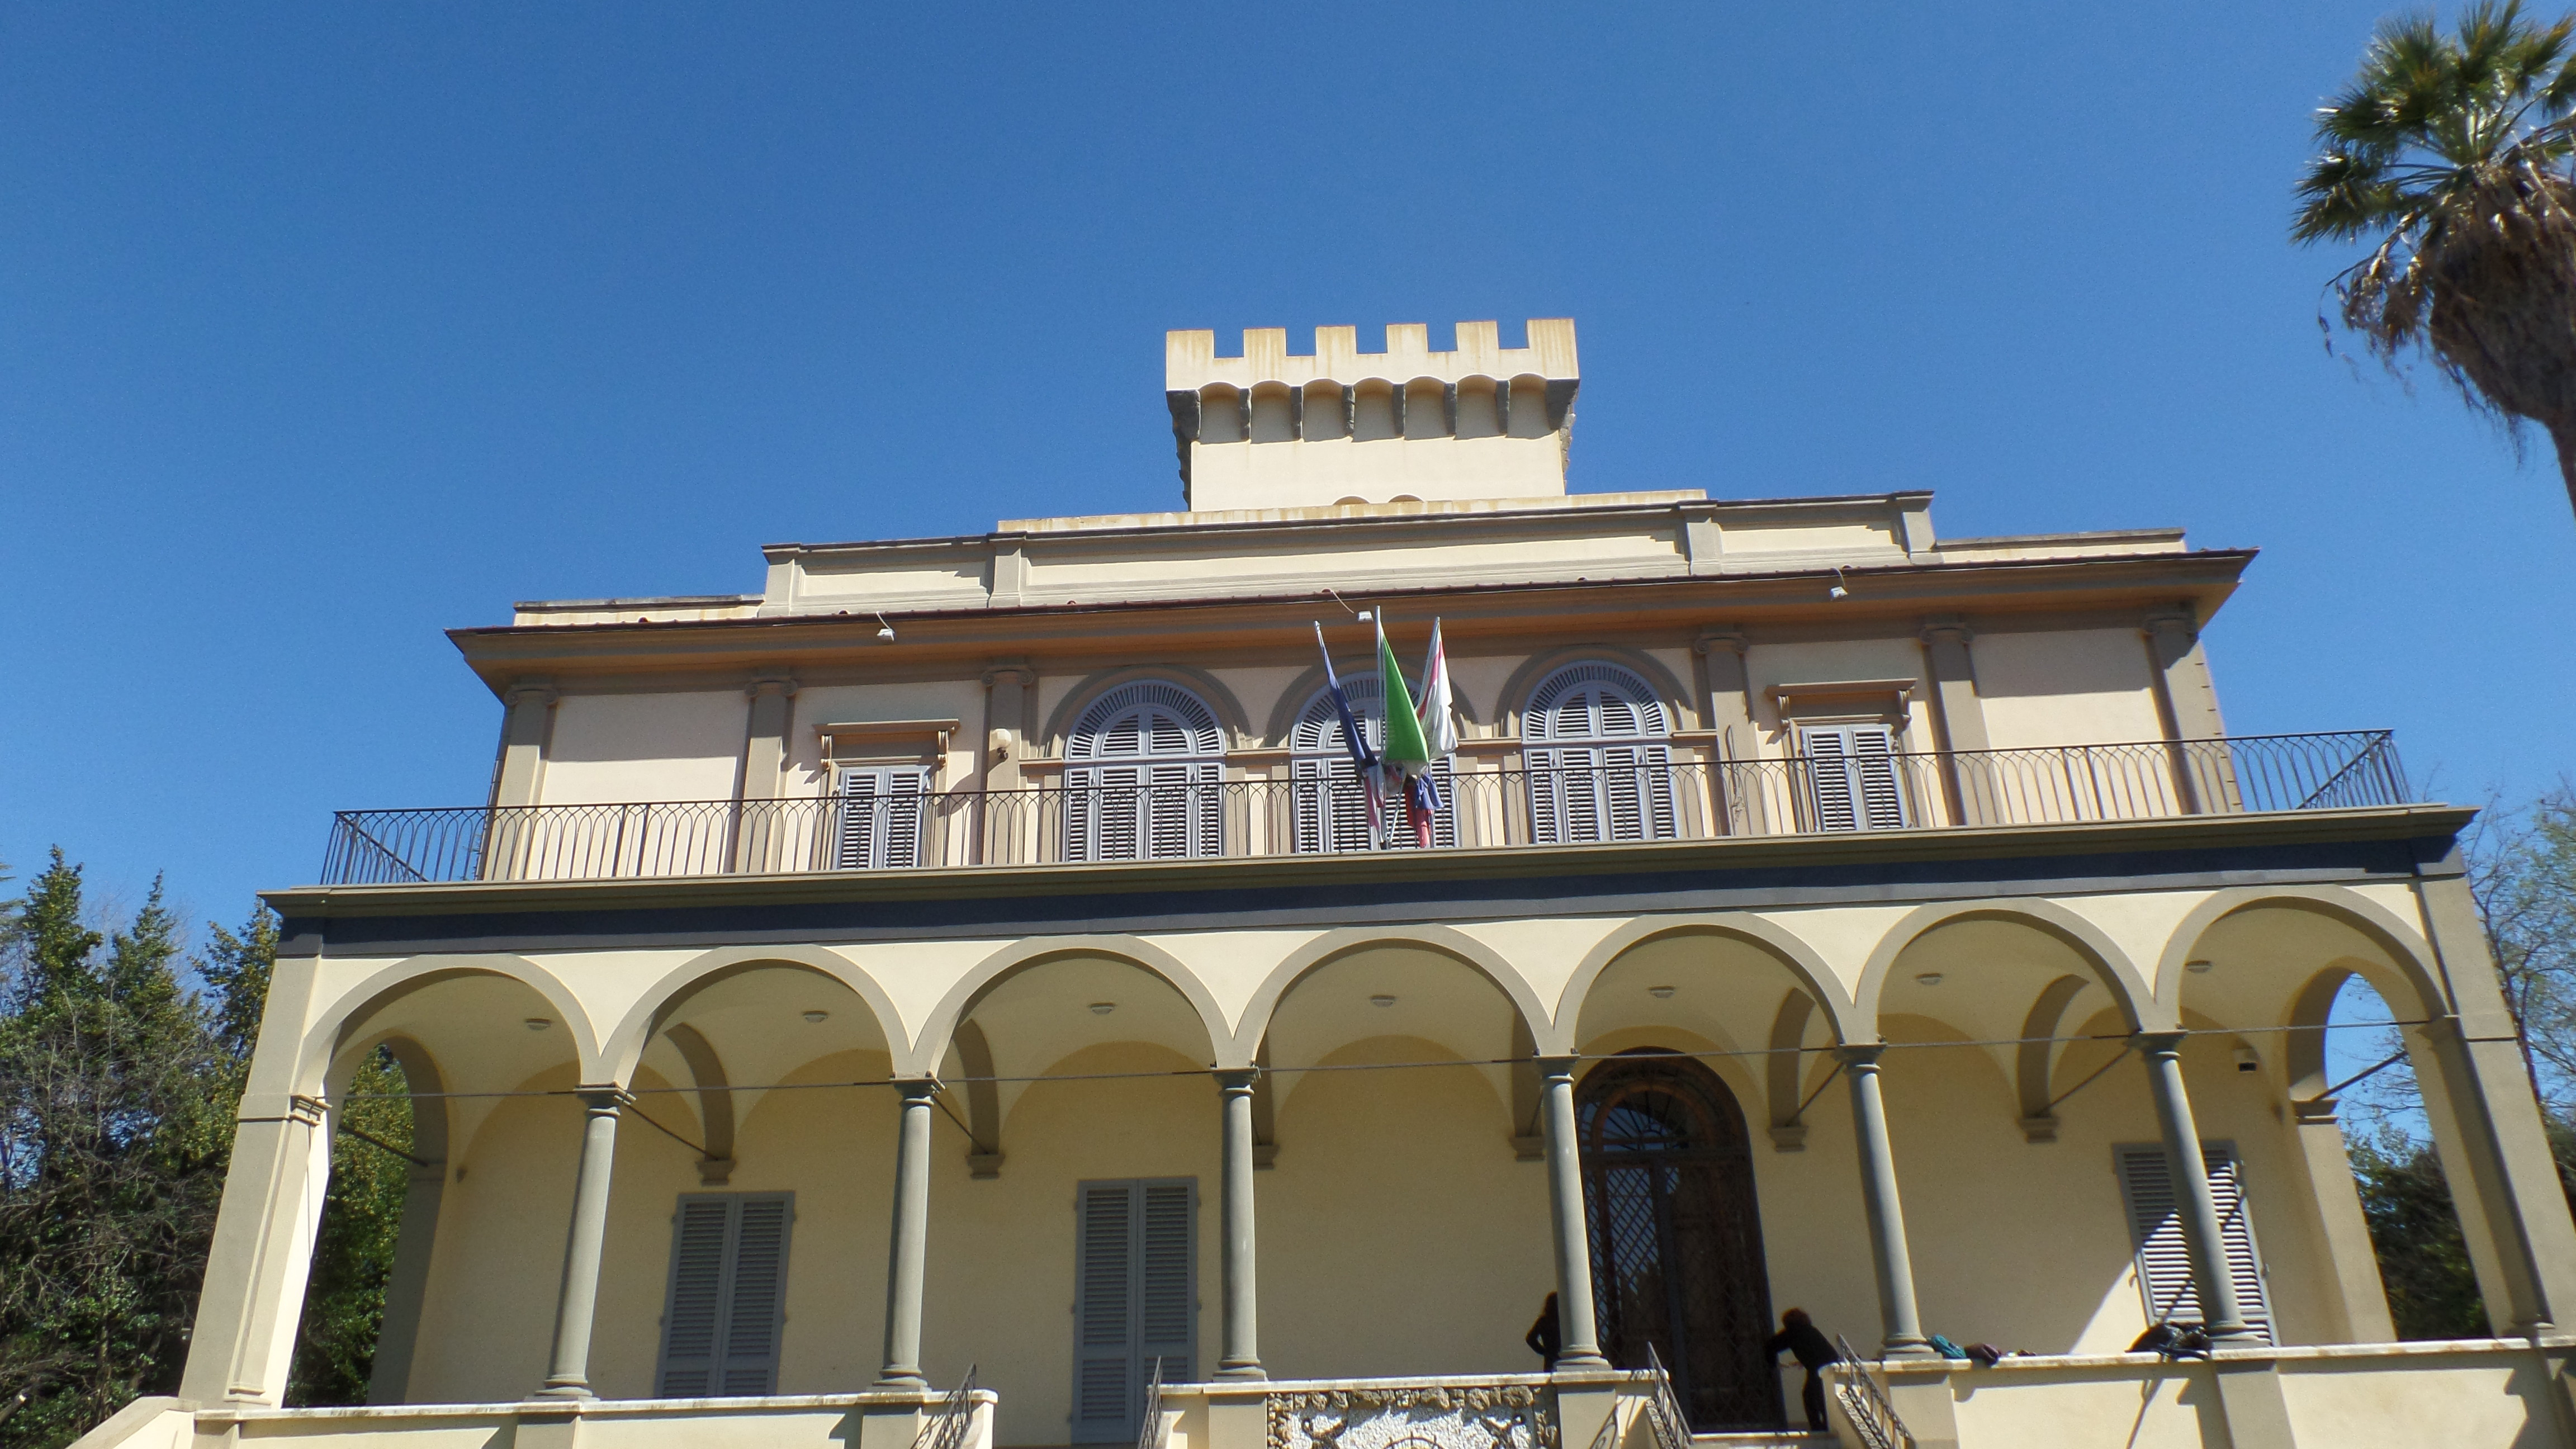 Villa Fabbricotti